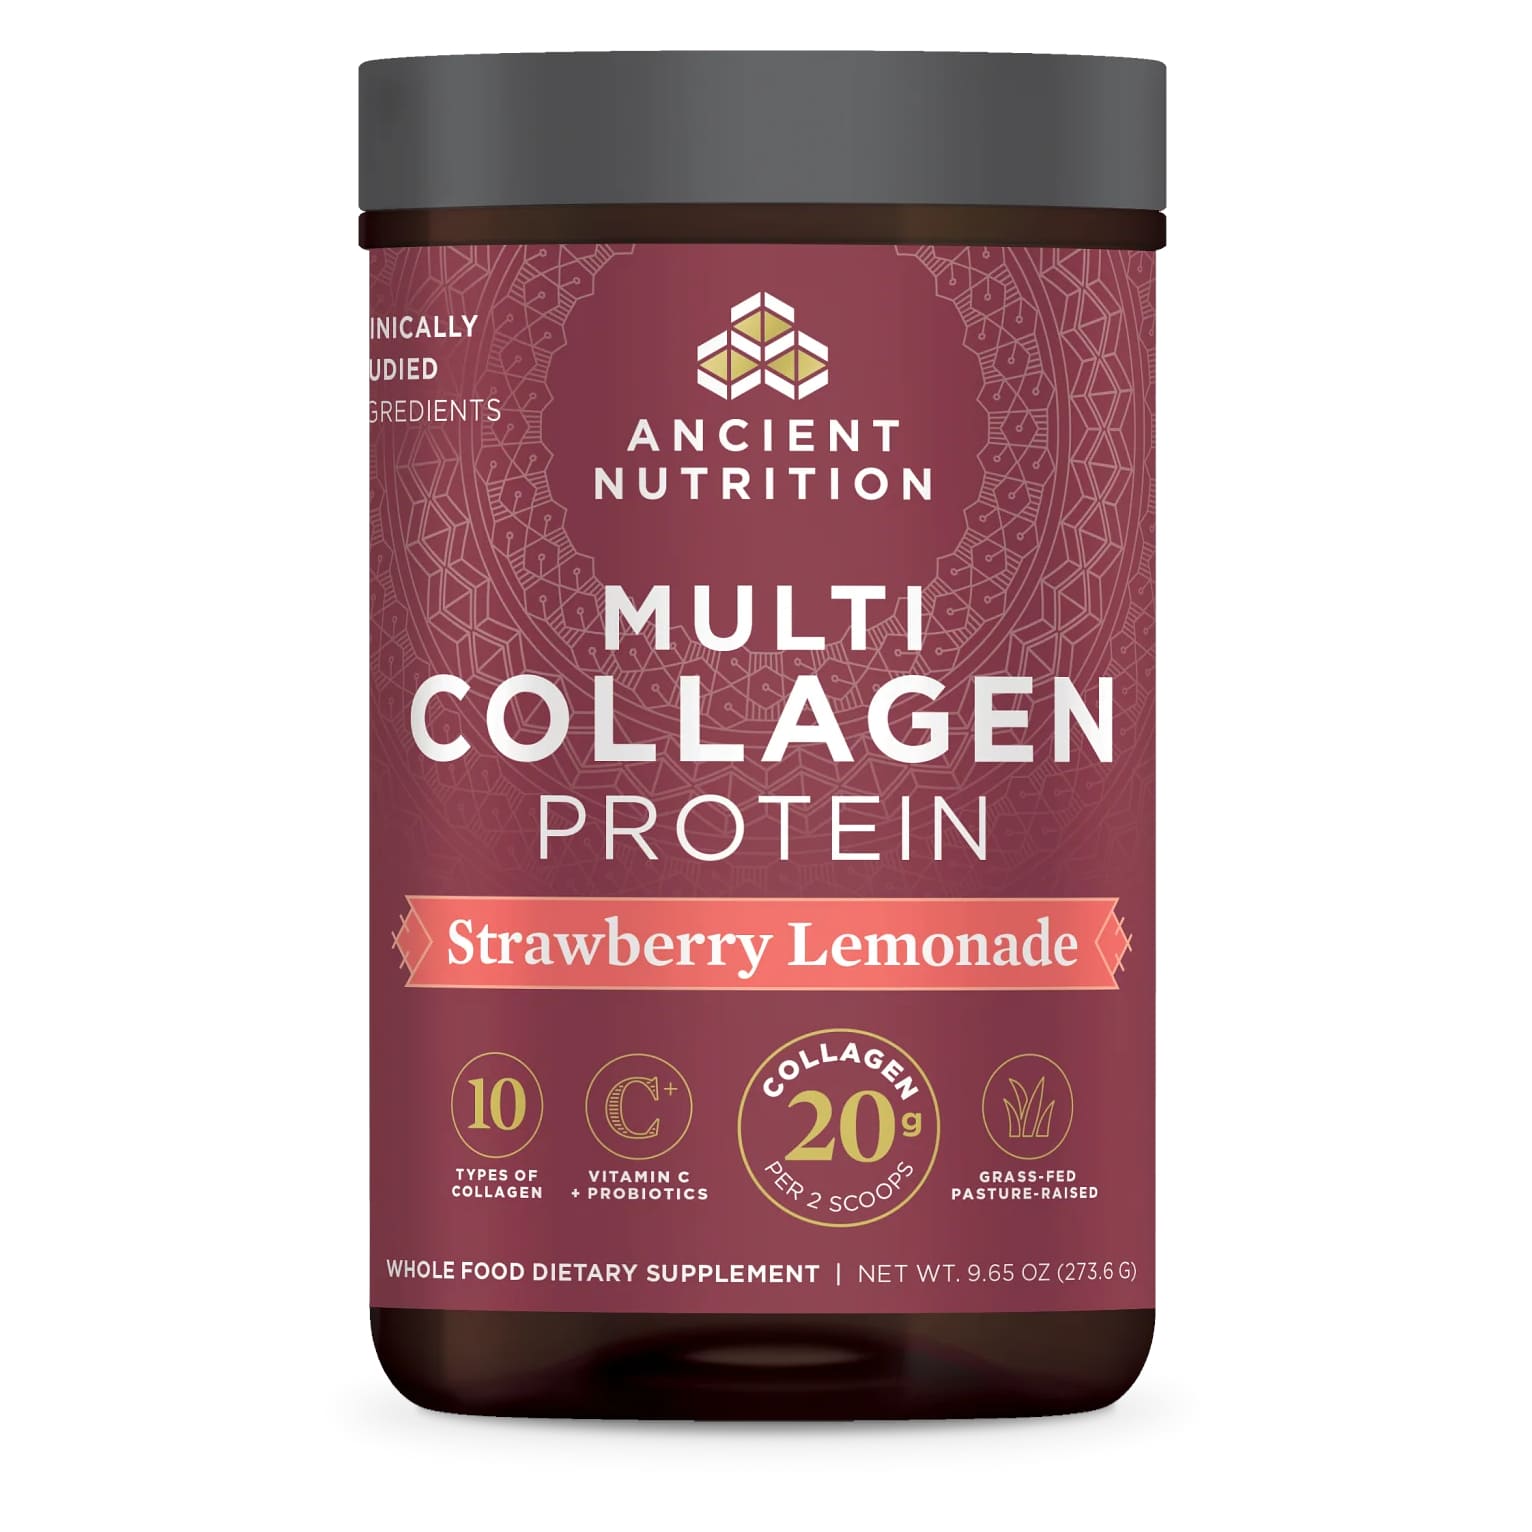 Коллаген Ancient Nutrition Multi Protein 10 Types Vitamin C + Probiotics Strawberry Lemonade, 273,6 г биологически активная добавка beguana коллаген 180 гр